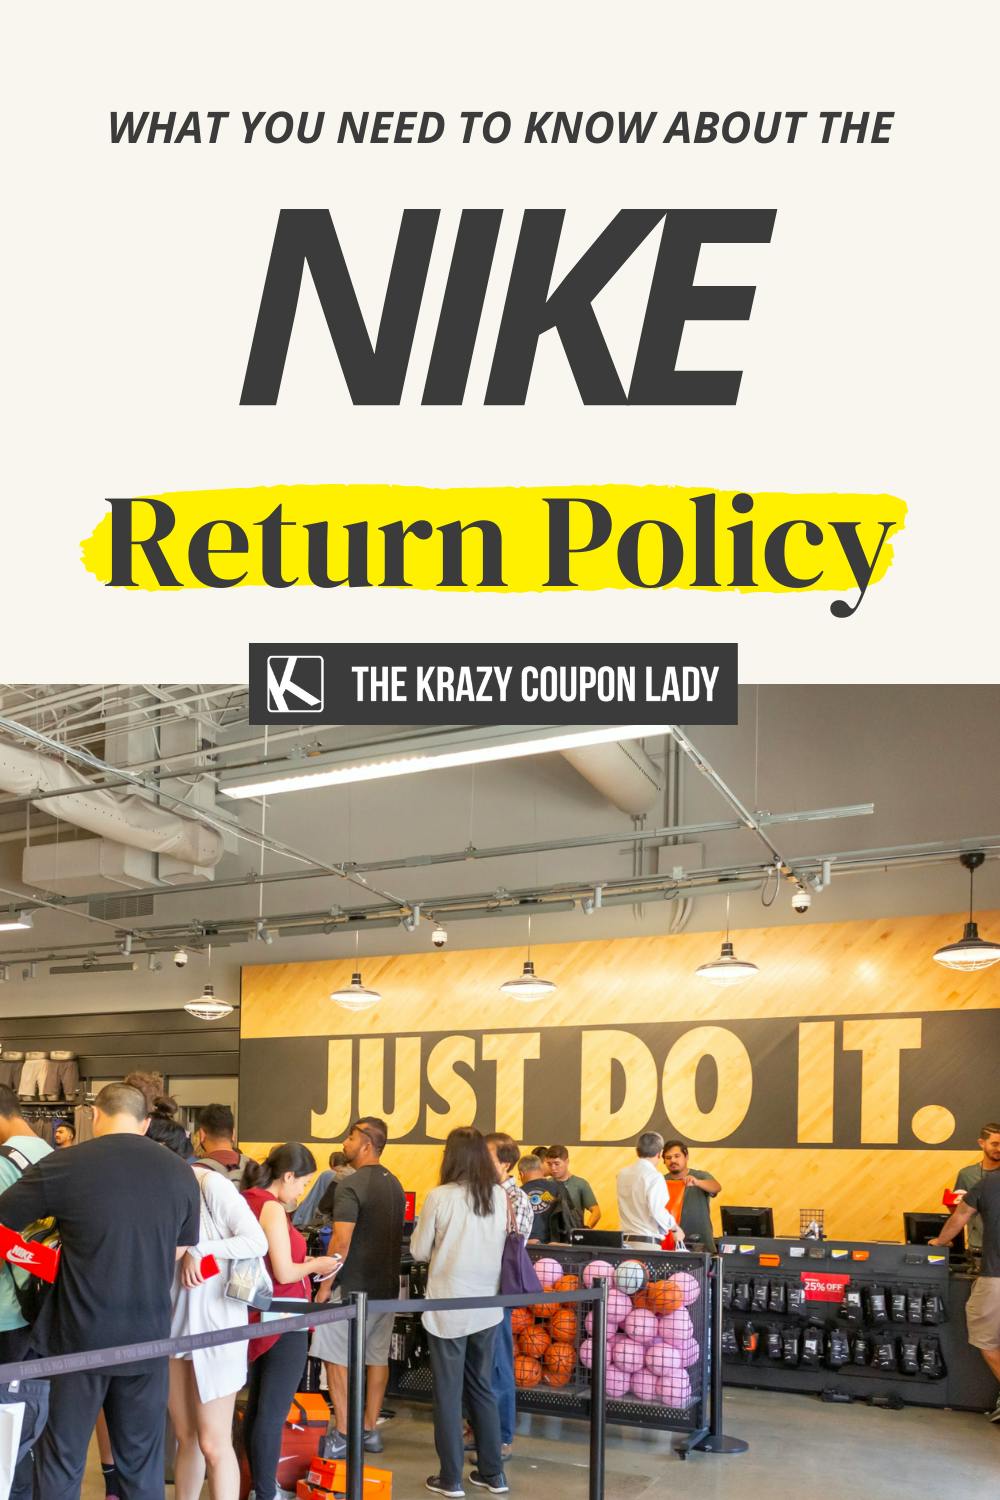 We Explain the Nike Return Policy - The 